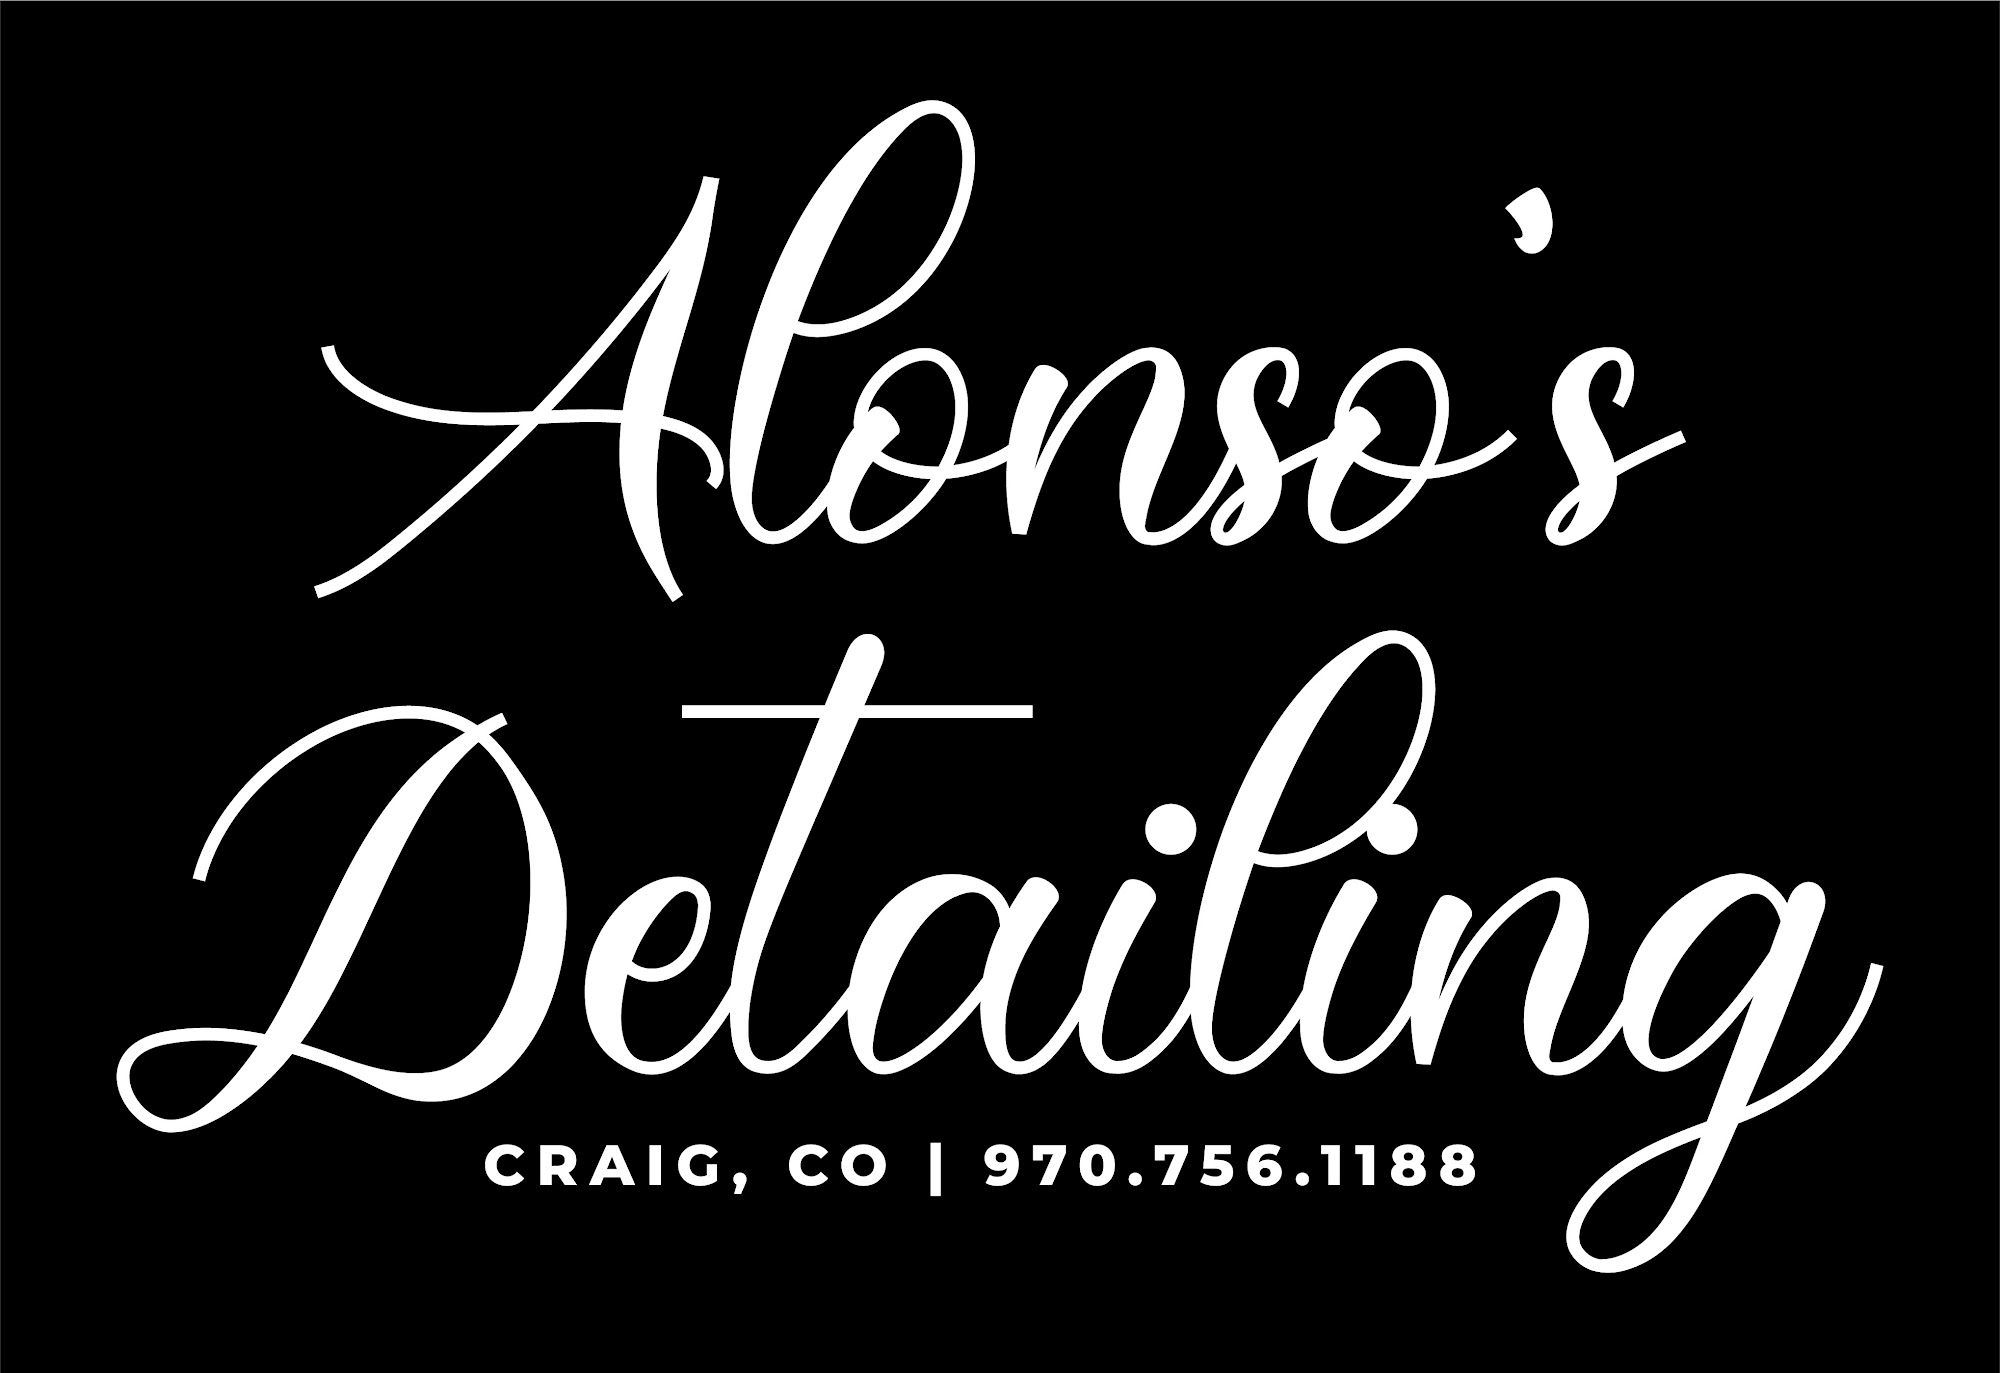 Alonsos Detailing LLC 517 E 7th St, Craig Colorado 81625